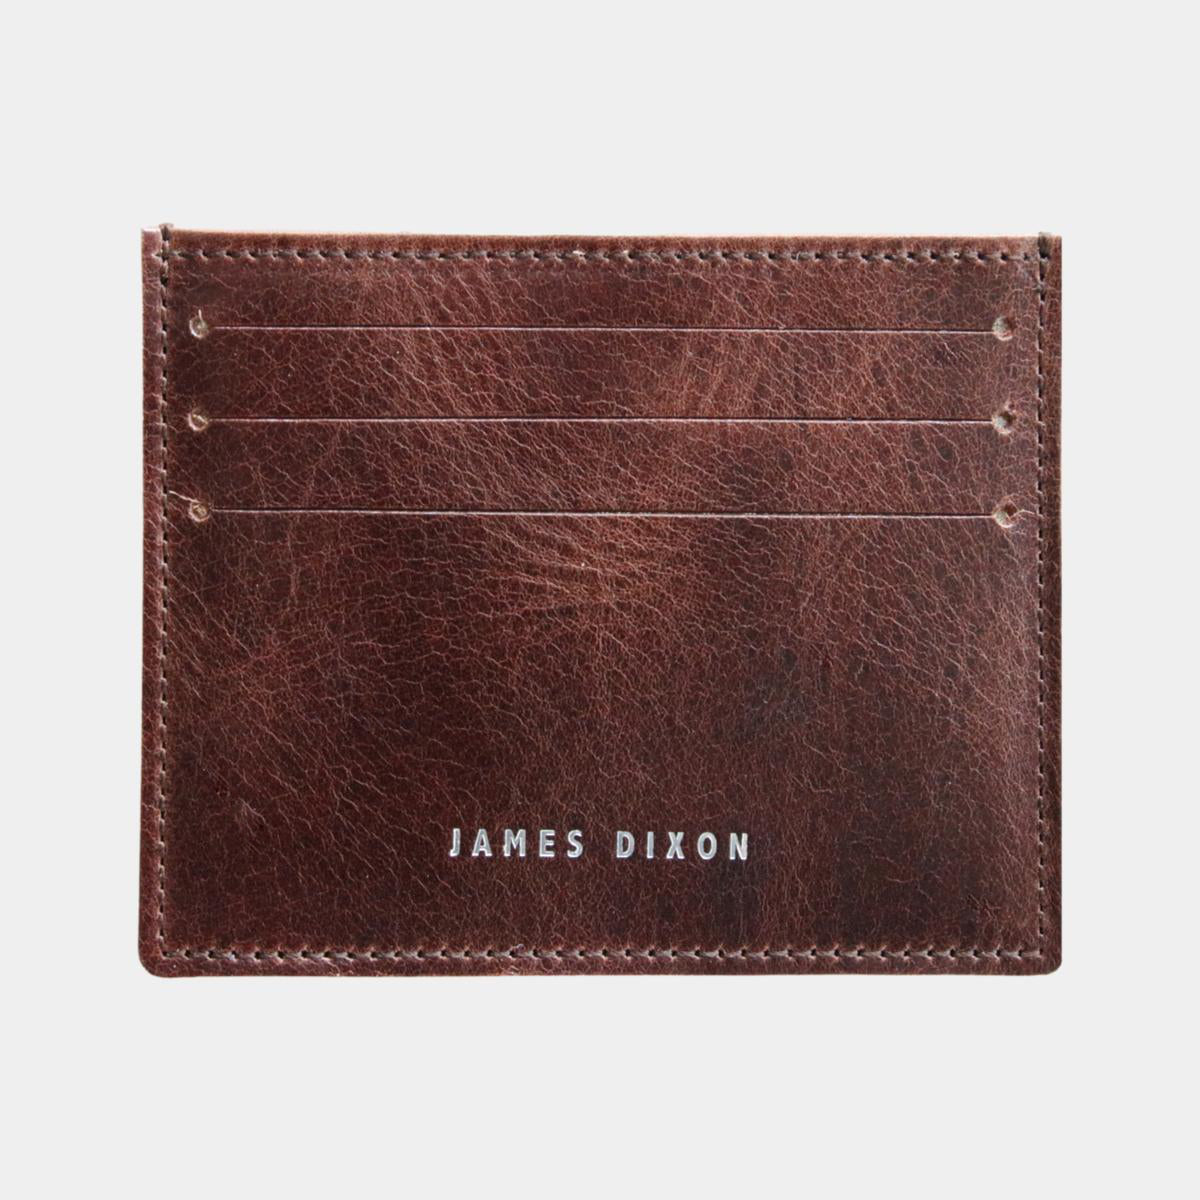 jd0329 james dixon poco classic cacao brown wallet front